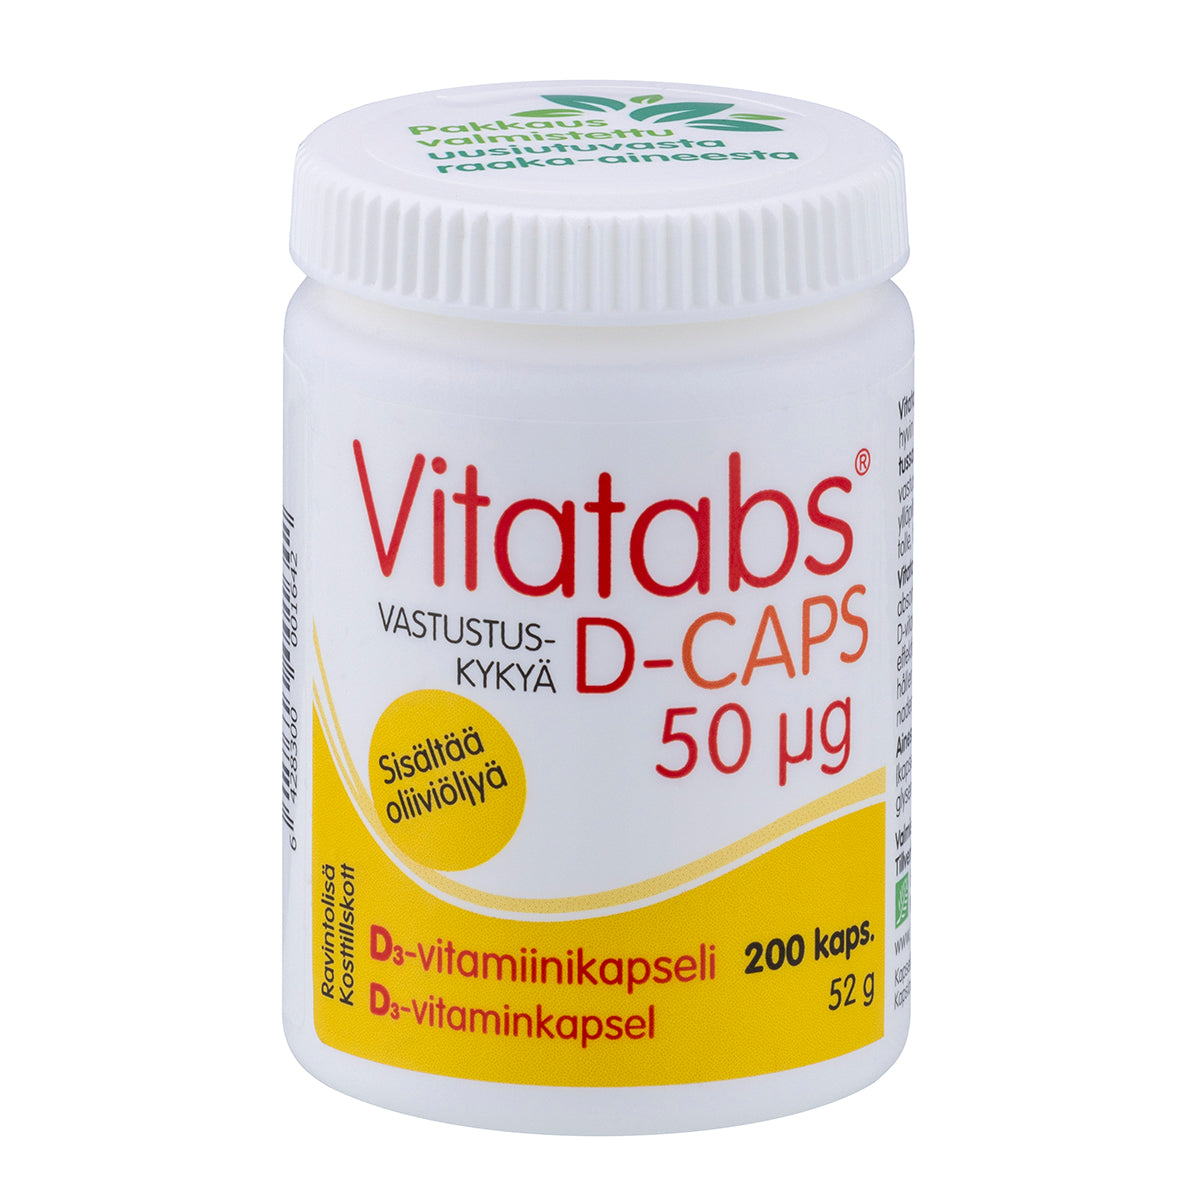 Vitatabs D-Caps 50 µg 200 kaps. - D-vitamiini Oliiviöljyssä